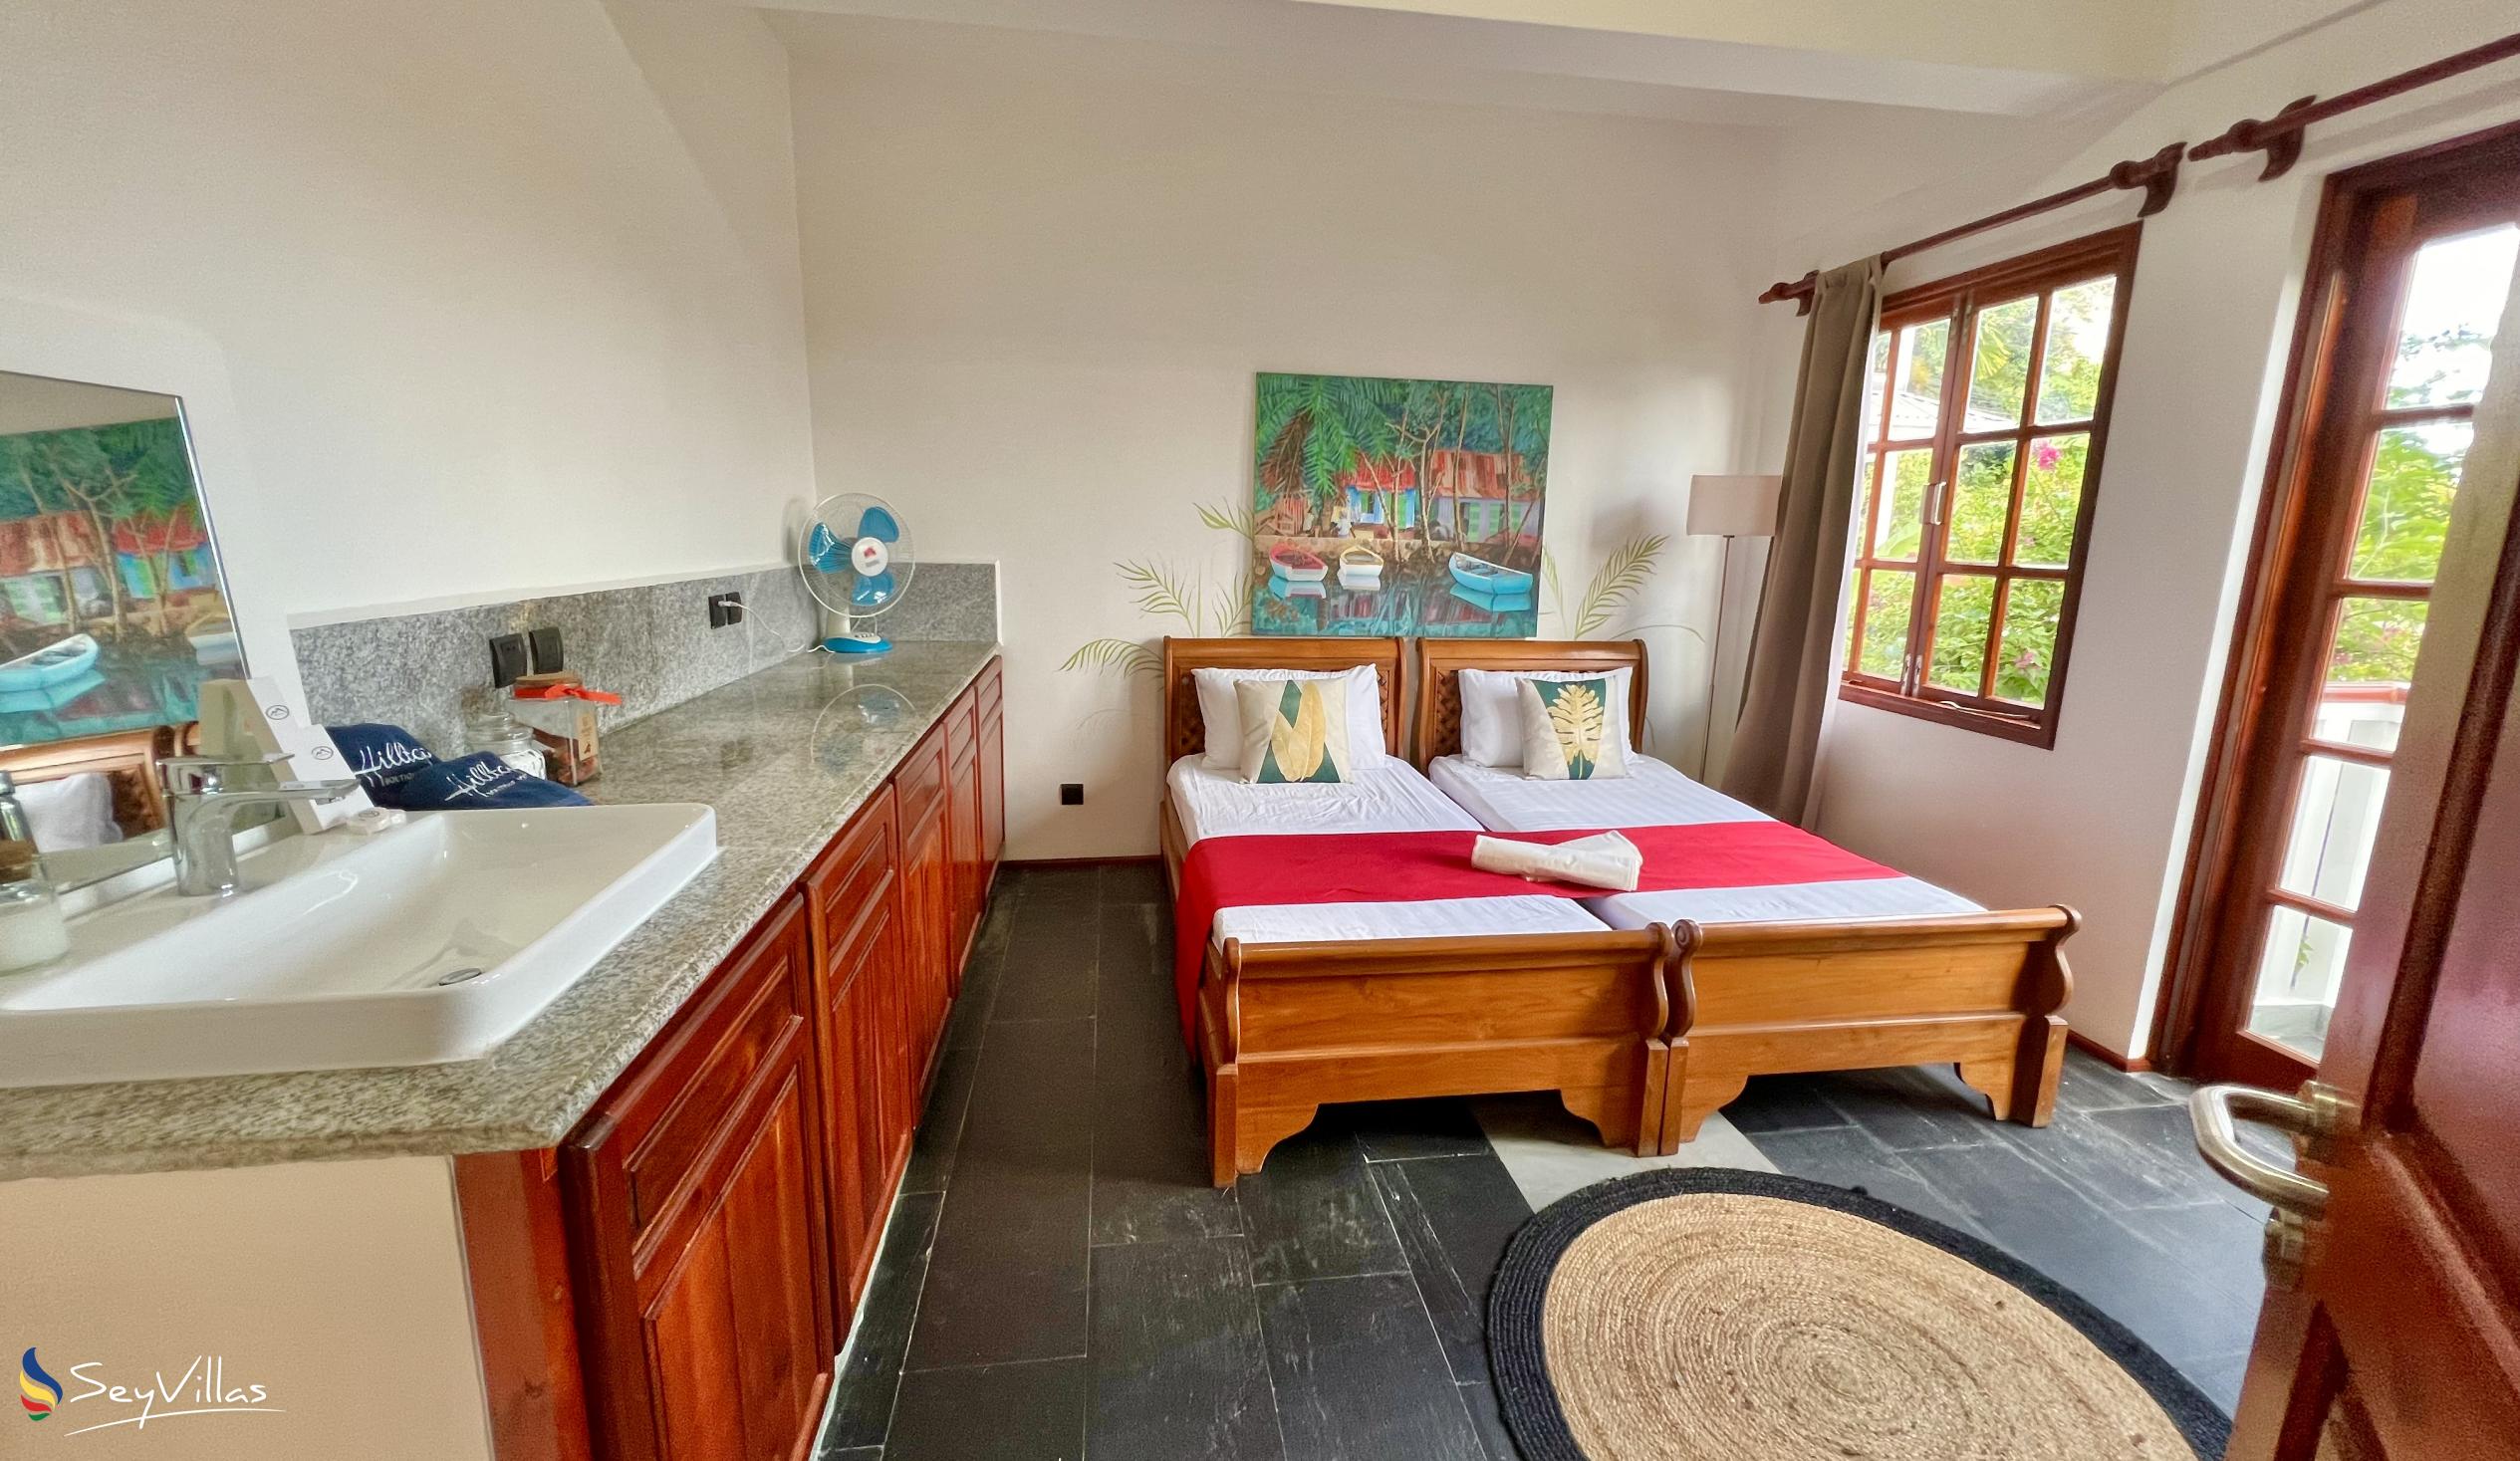 Photo 76: Hilltop Boutique Hotel - 2-Bedroom Apartment - Mahé (Seychelles)